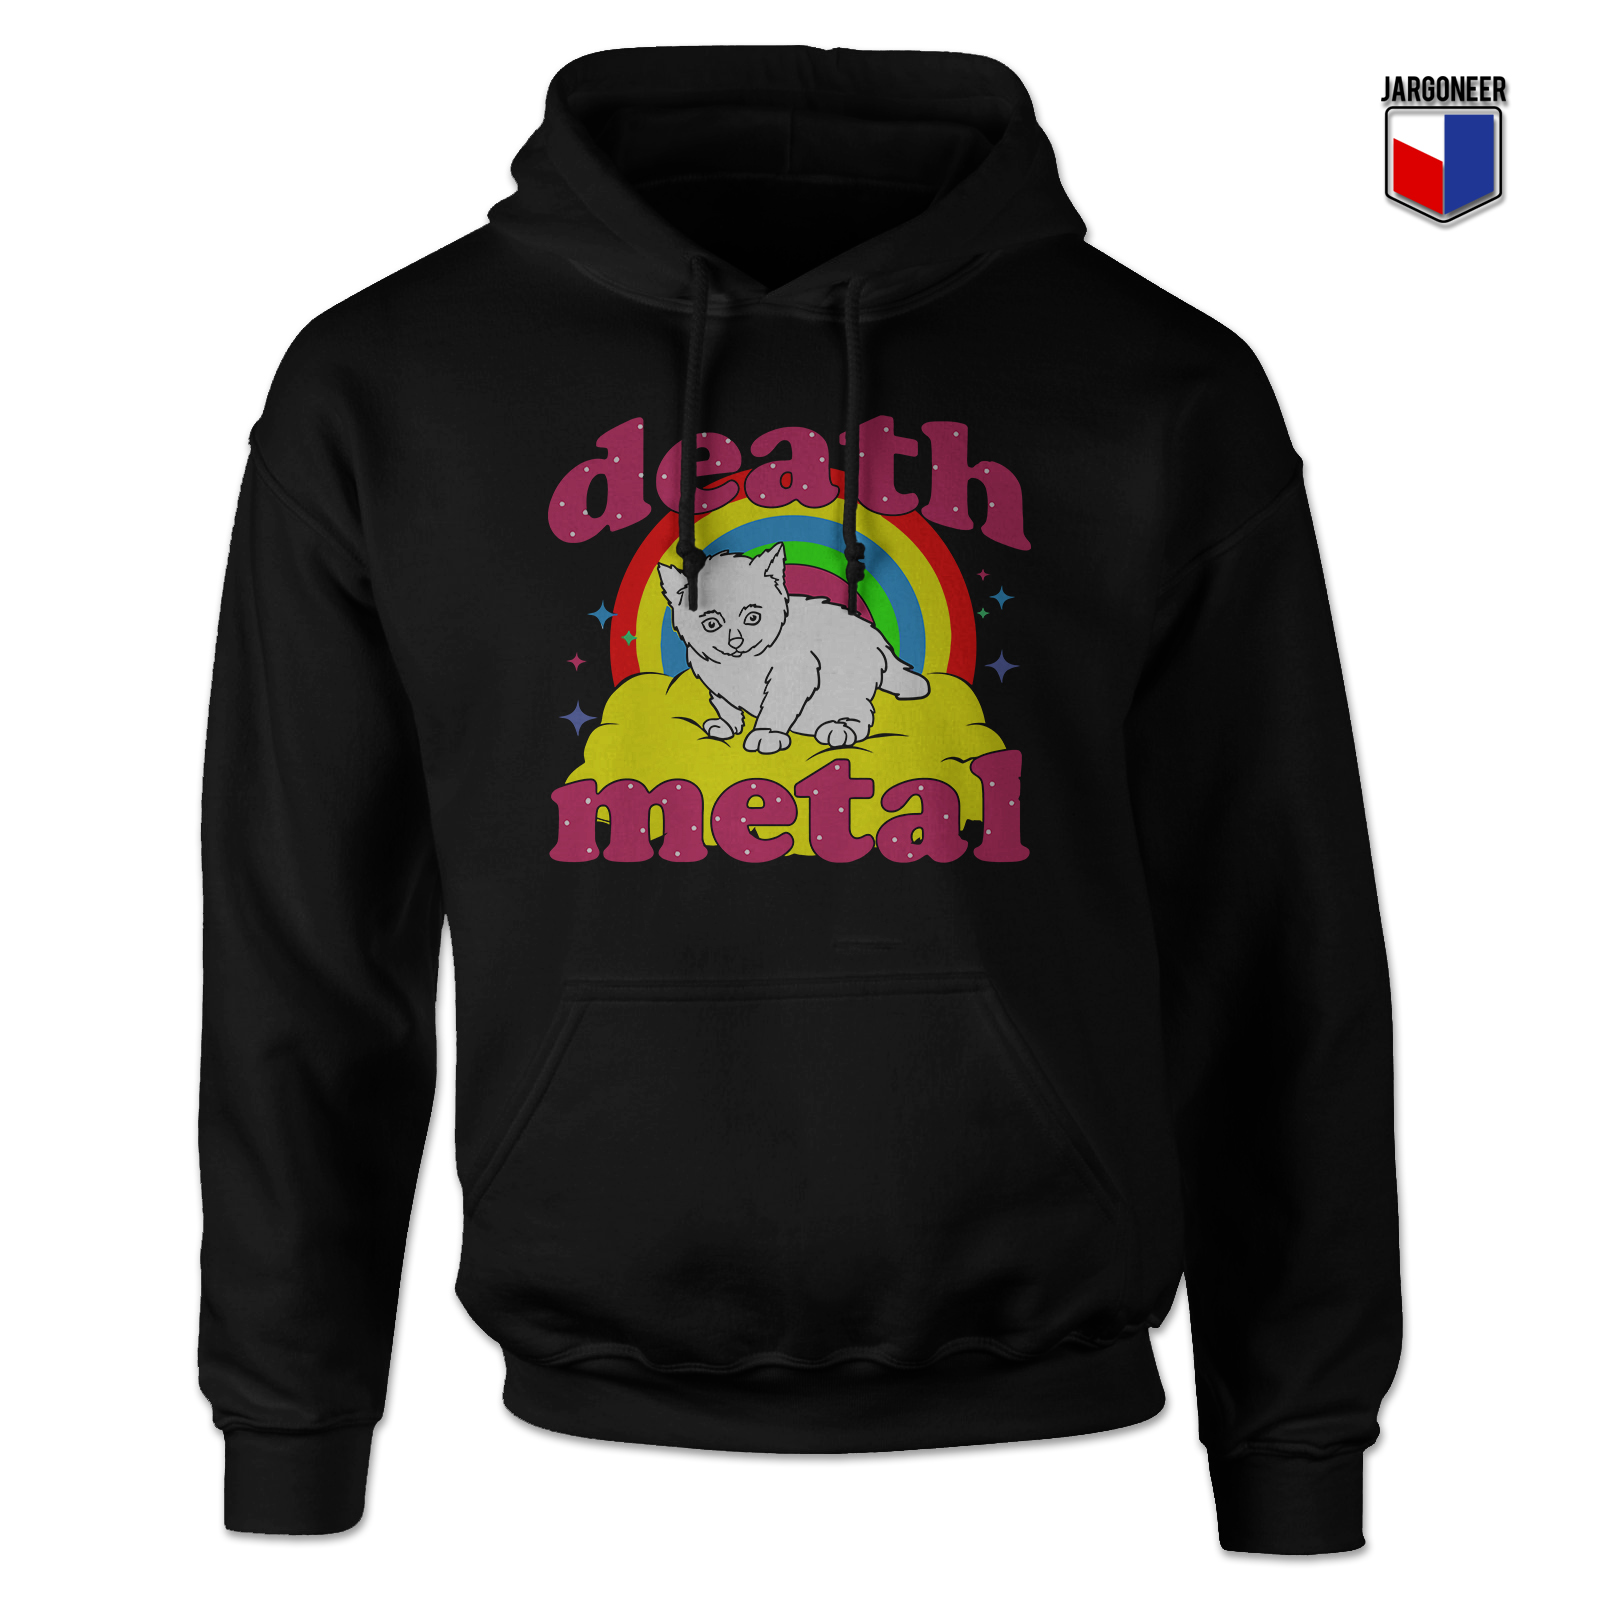 Death Metal Black Hoody - Shop Unique Graphic Cool Shirt Designs